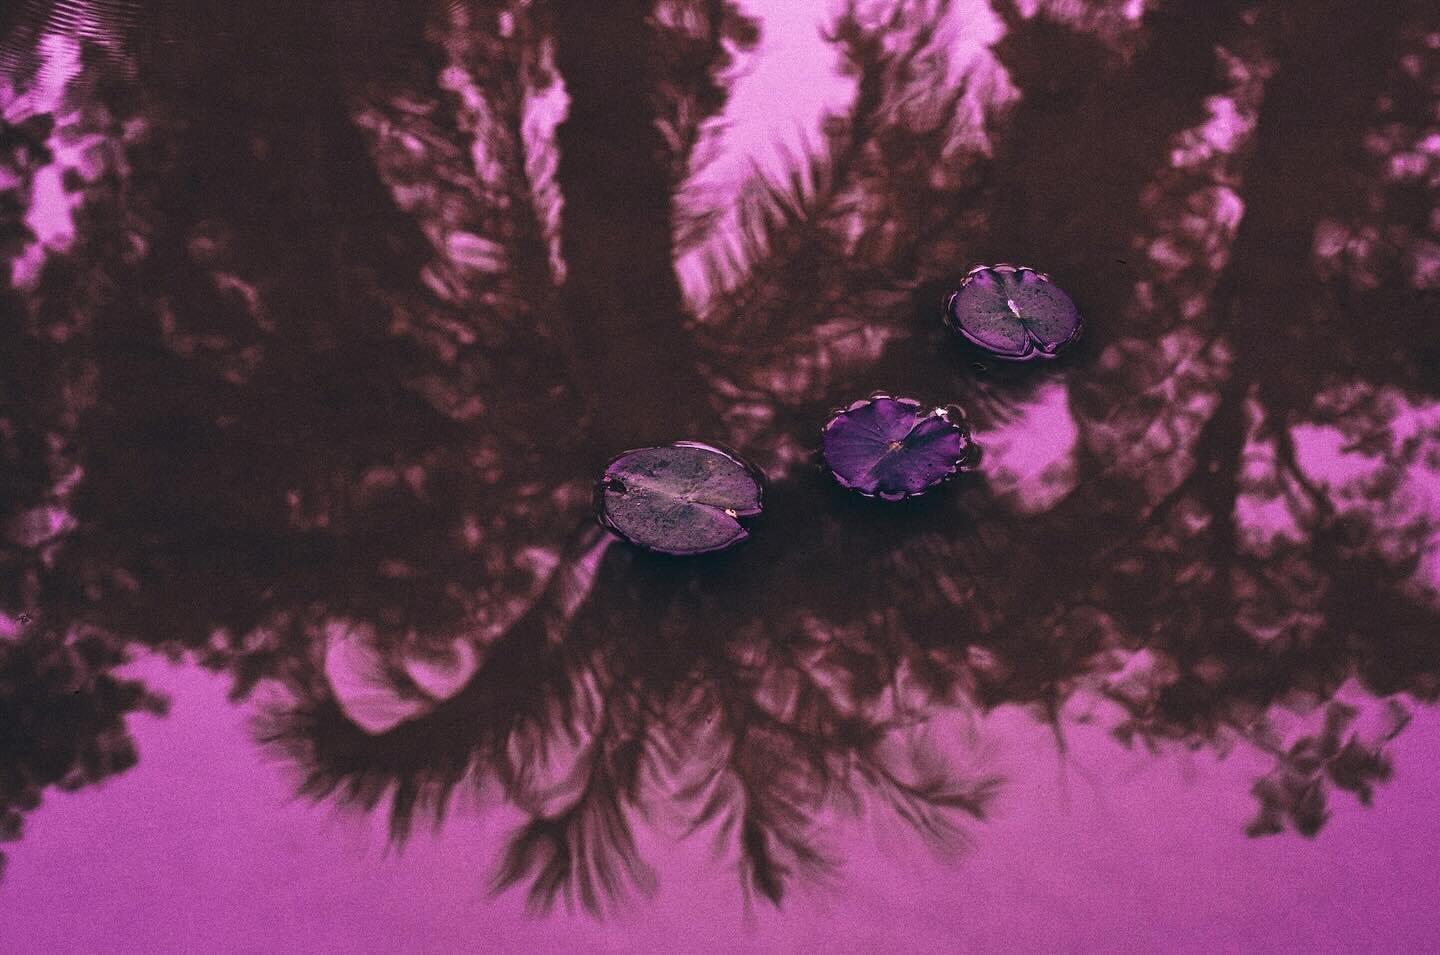 Palm tree reflection 🌴💜
.
.
.
#photography #neonphotography #nikonmacro #macrophotography #naturephotography #botanicphotography #lifeinpink #nikonphotography #flowersphotography #studiopushpa #frenchphotographer #sintra #sintragardens #garden #wat